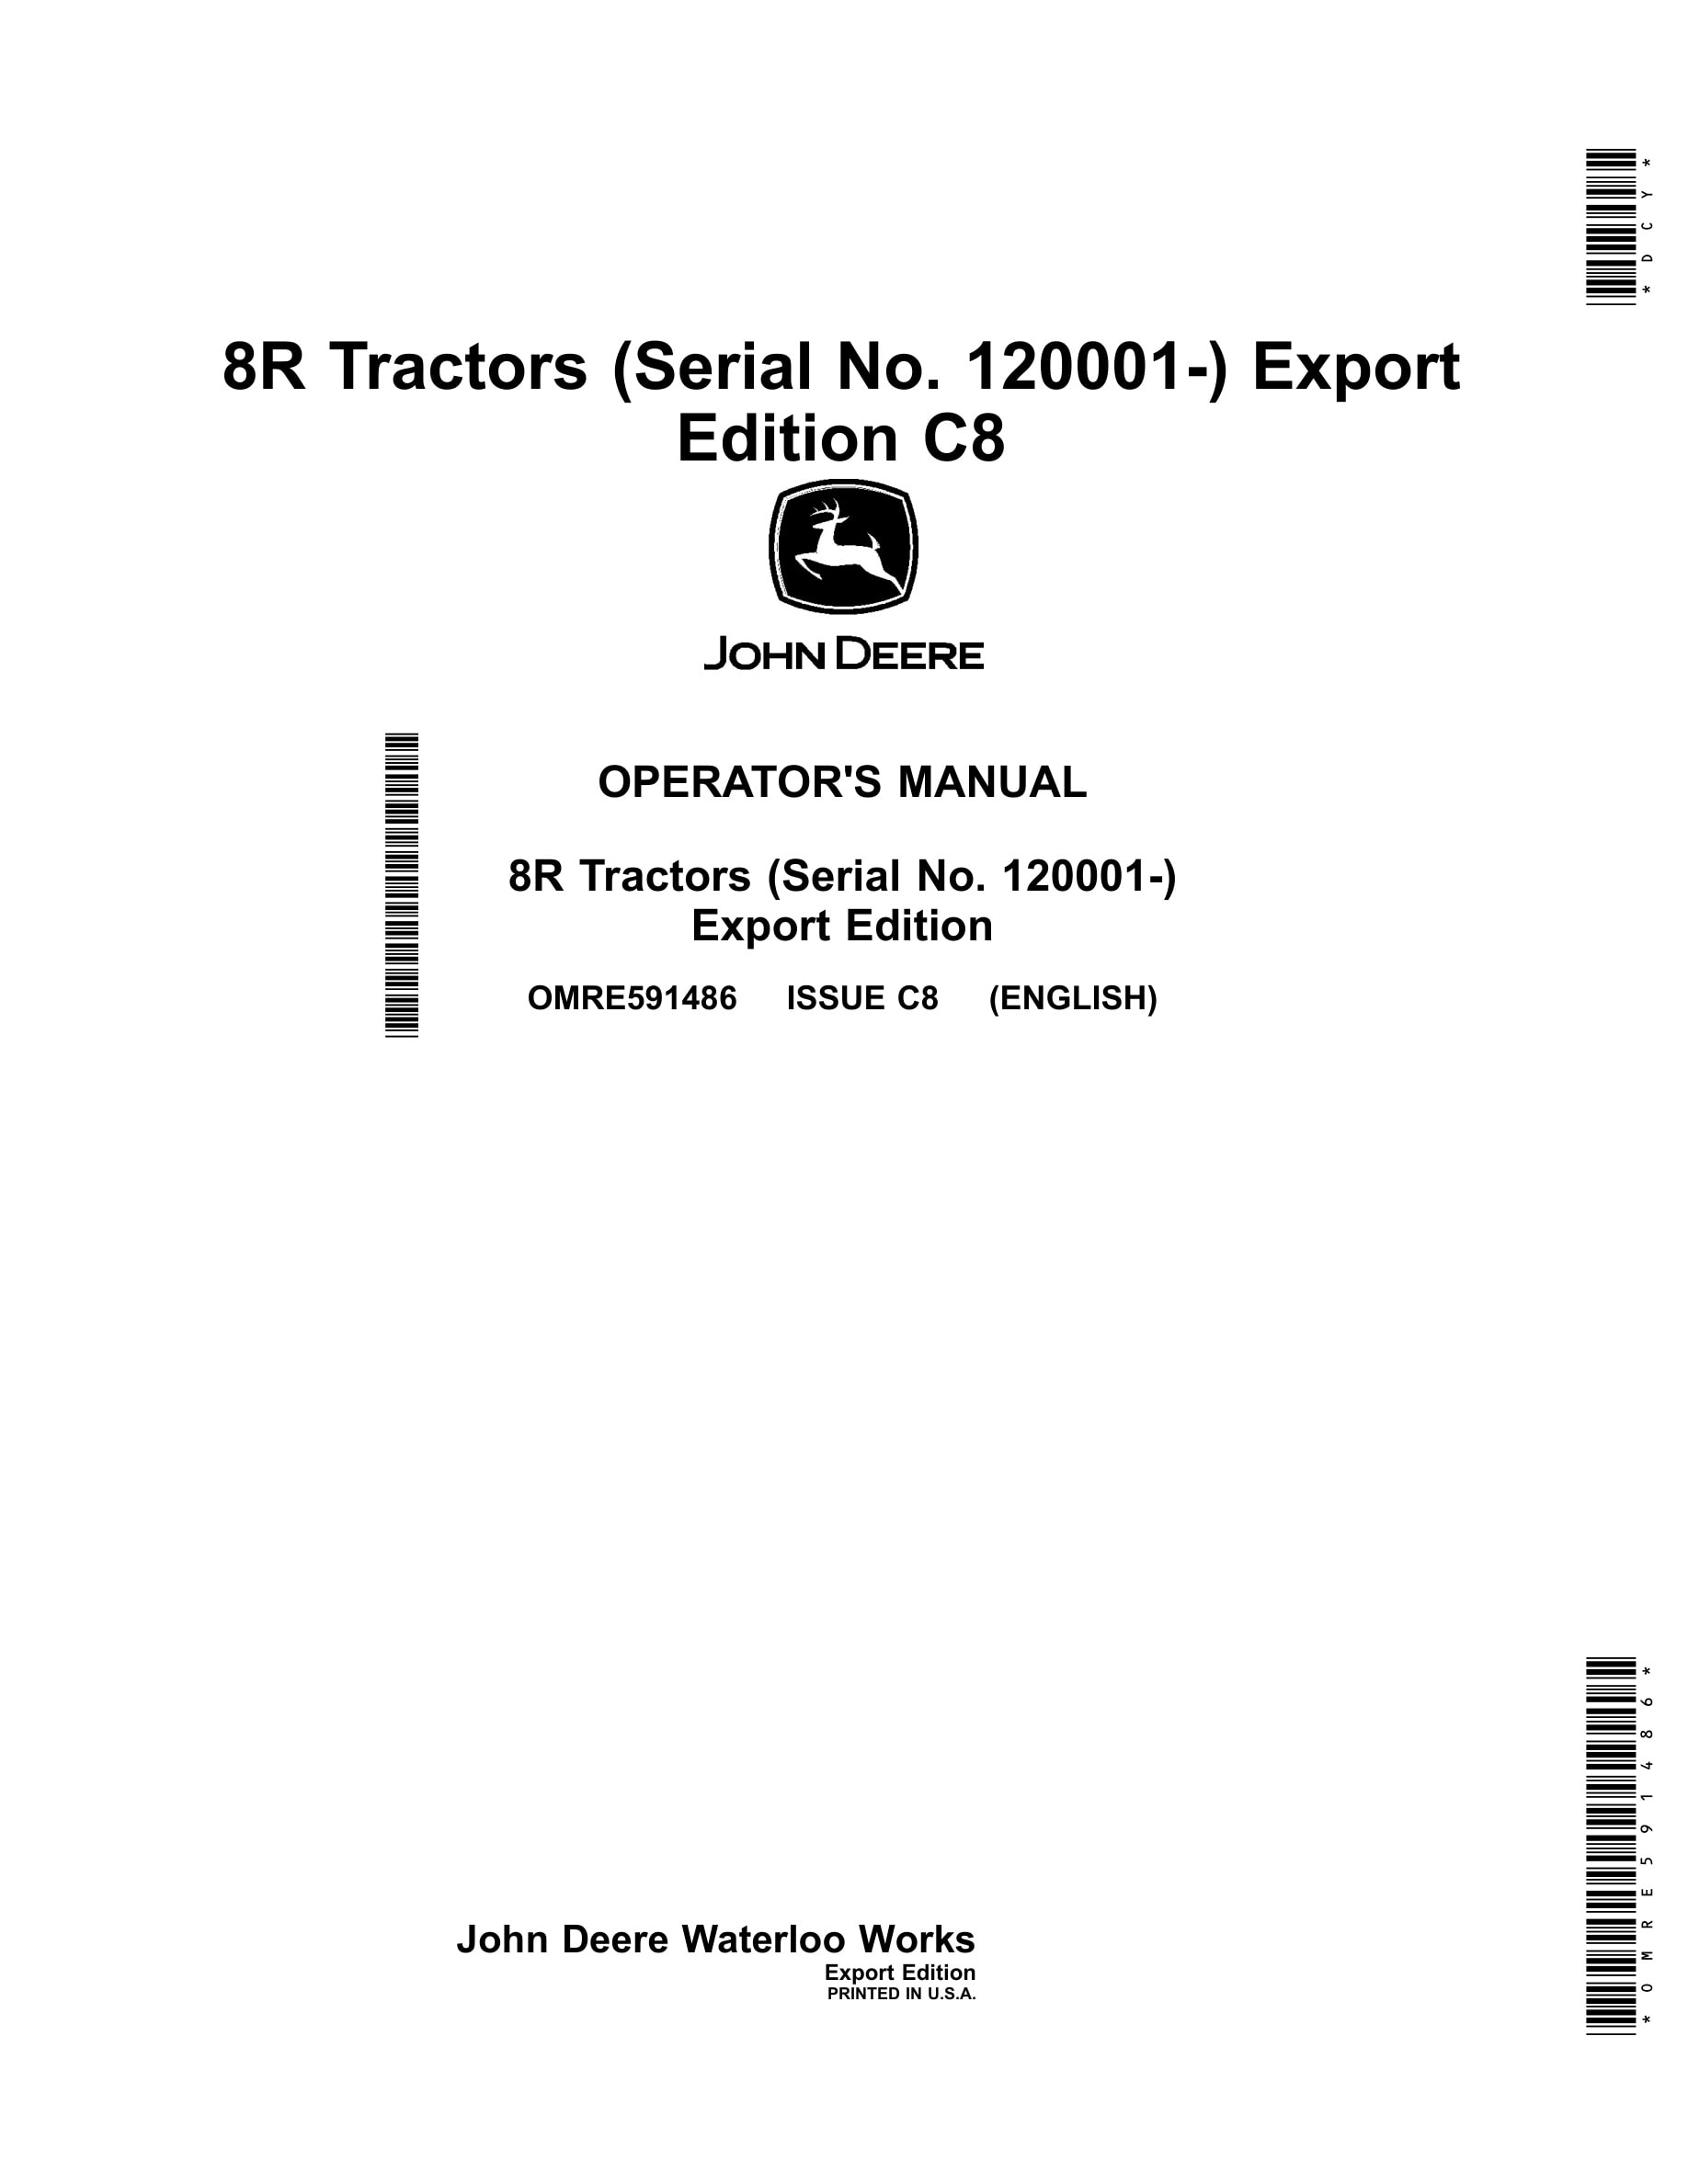 John Deere 8r Tractors Operator Manuals OMRE591486-1